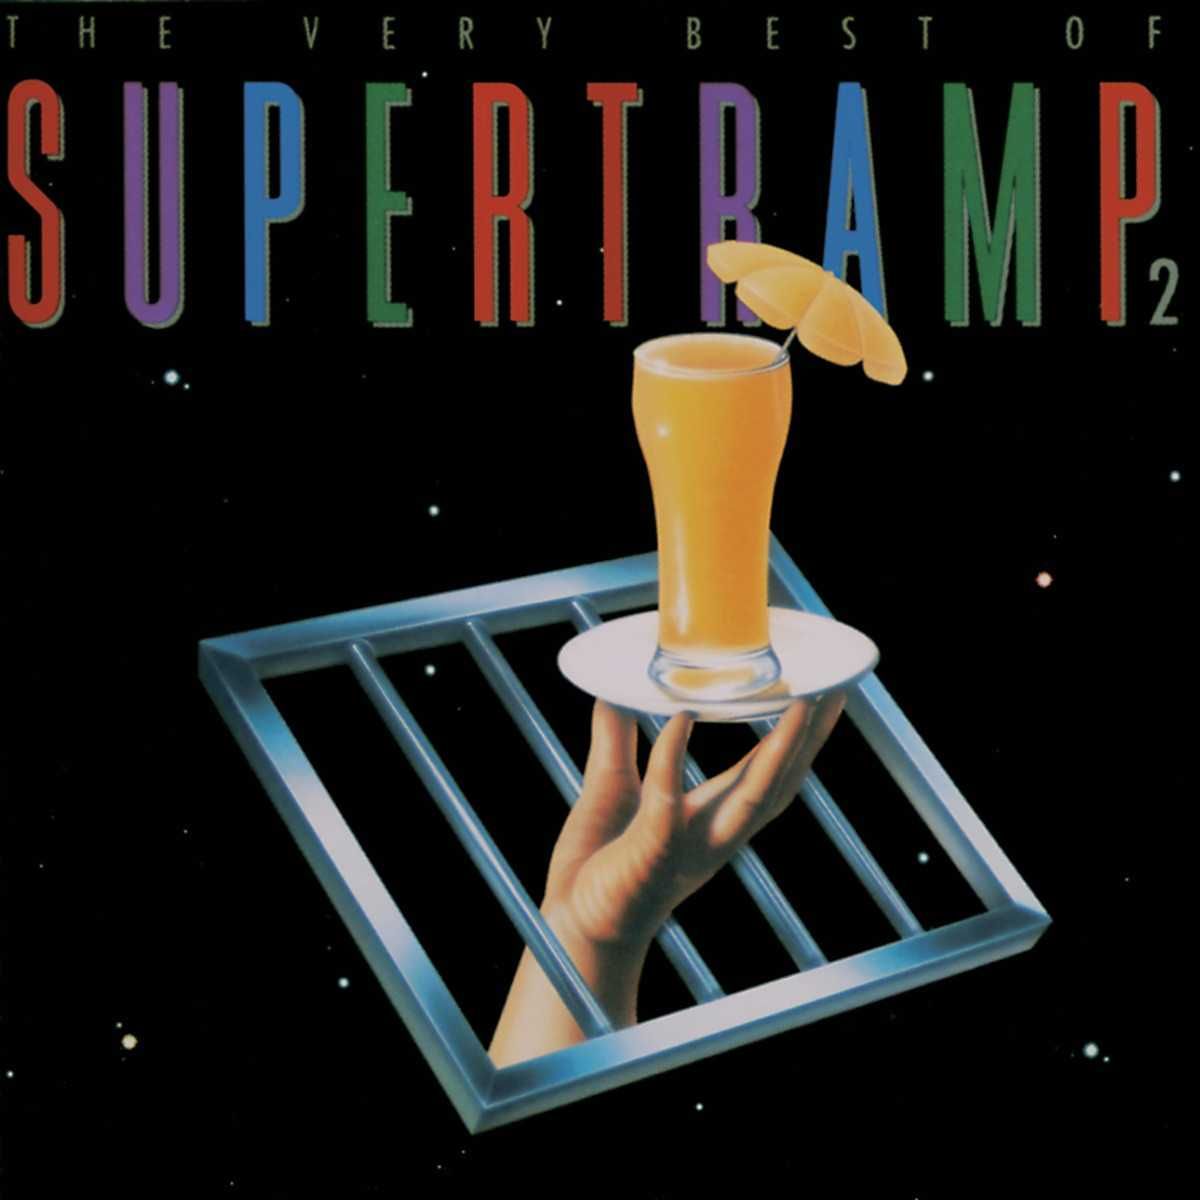 Supertramp – "The Very Best Of Supertramp" CD